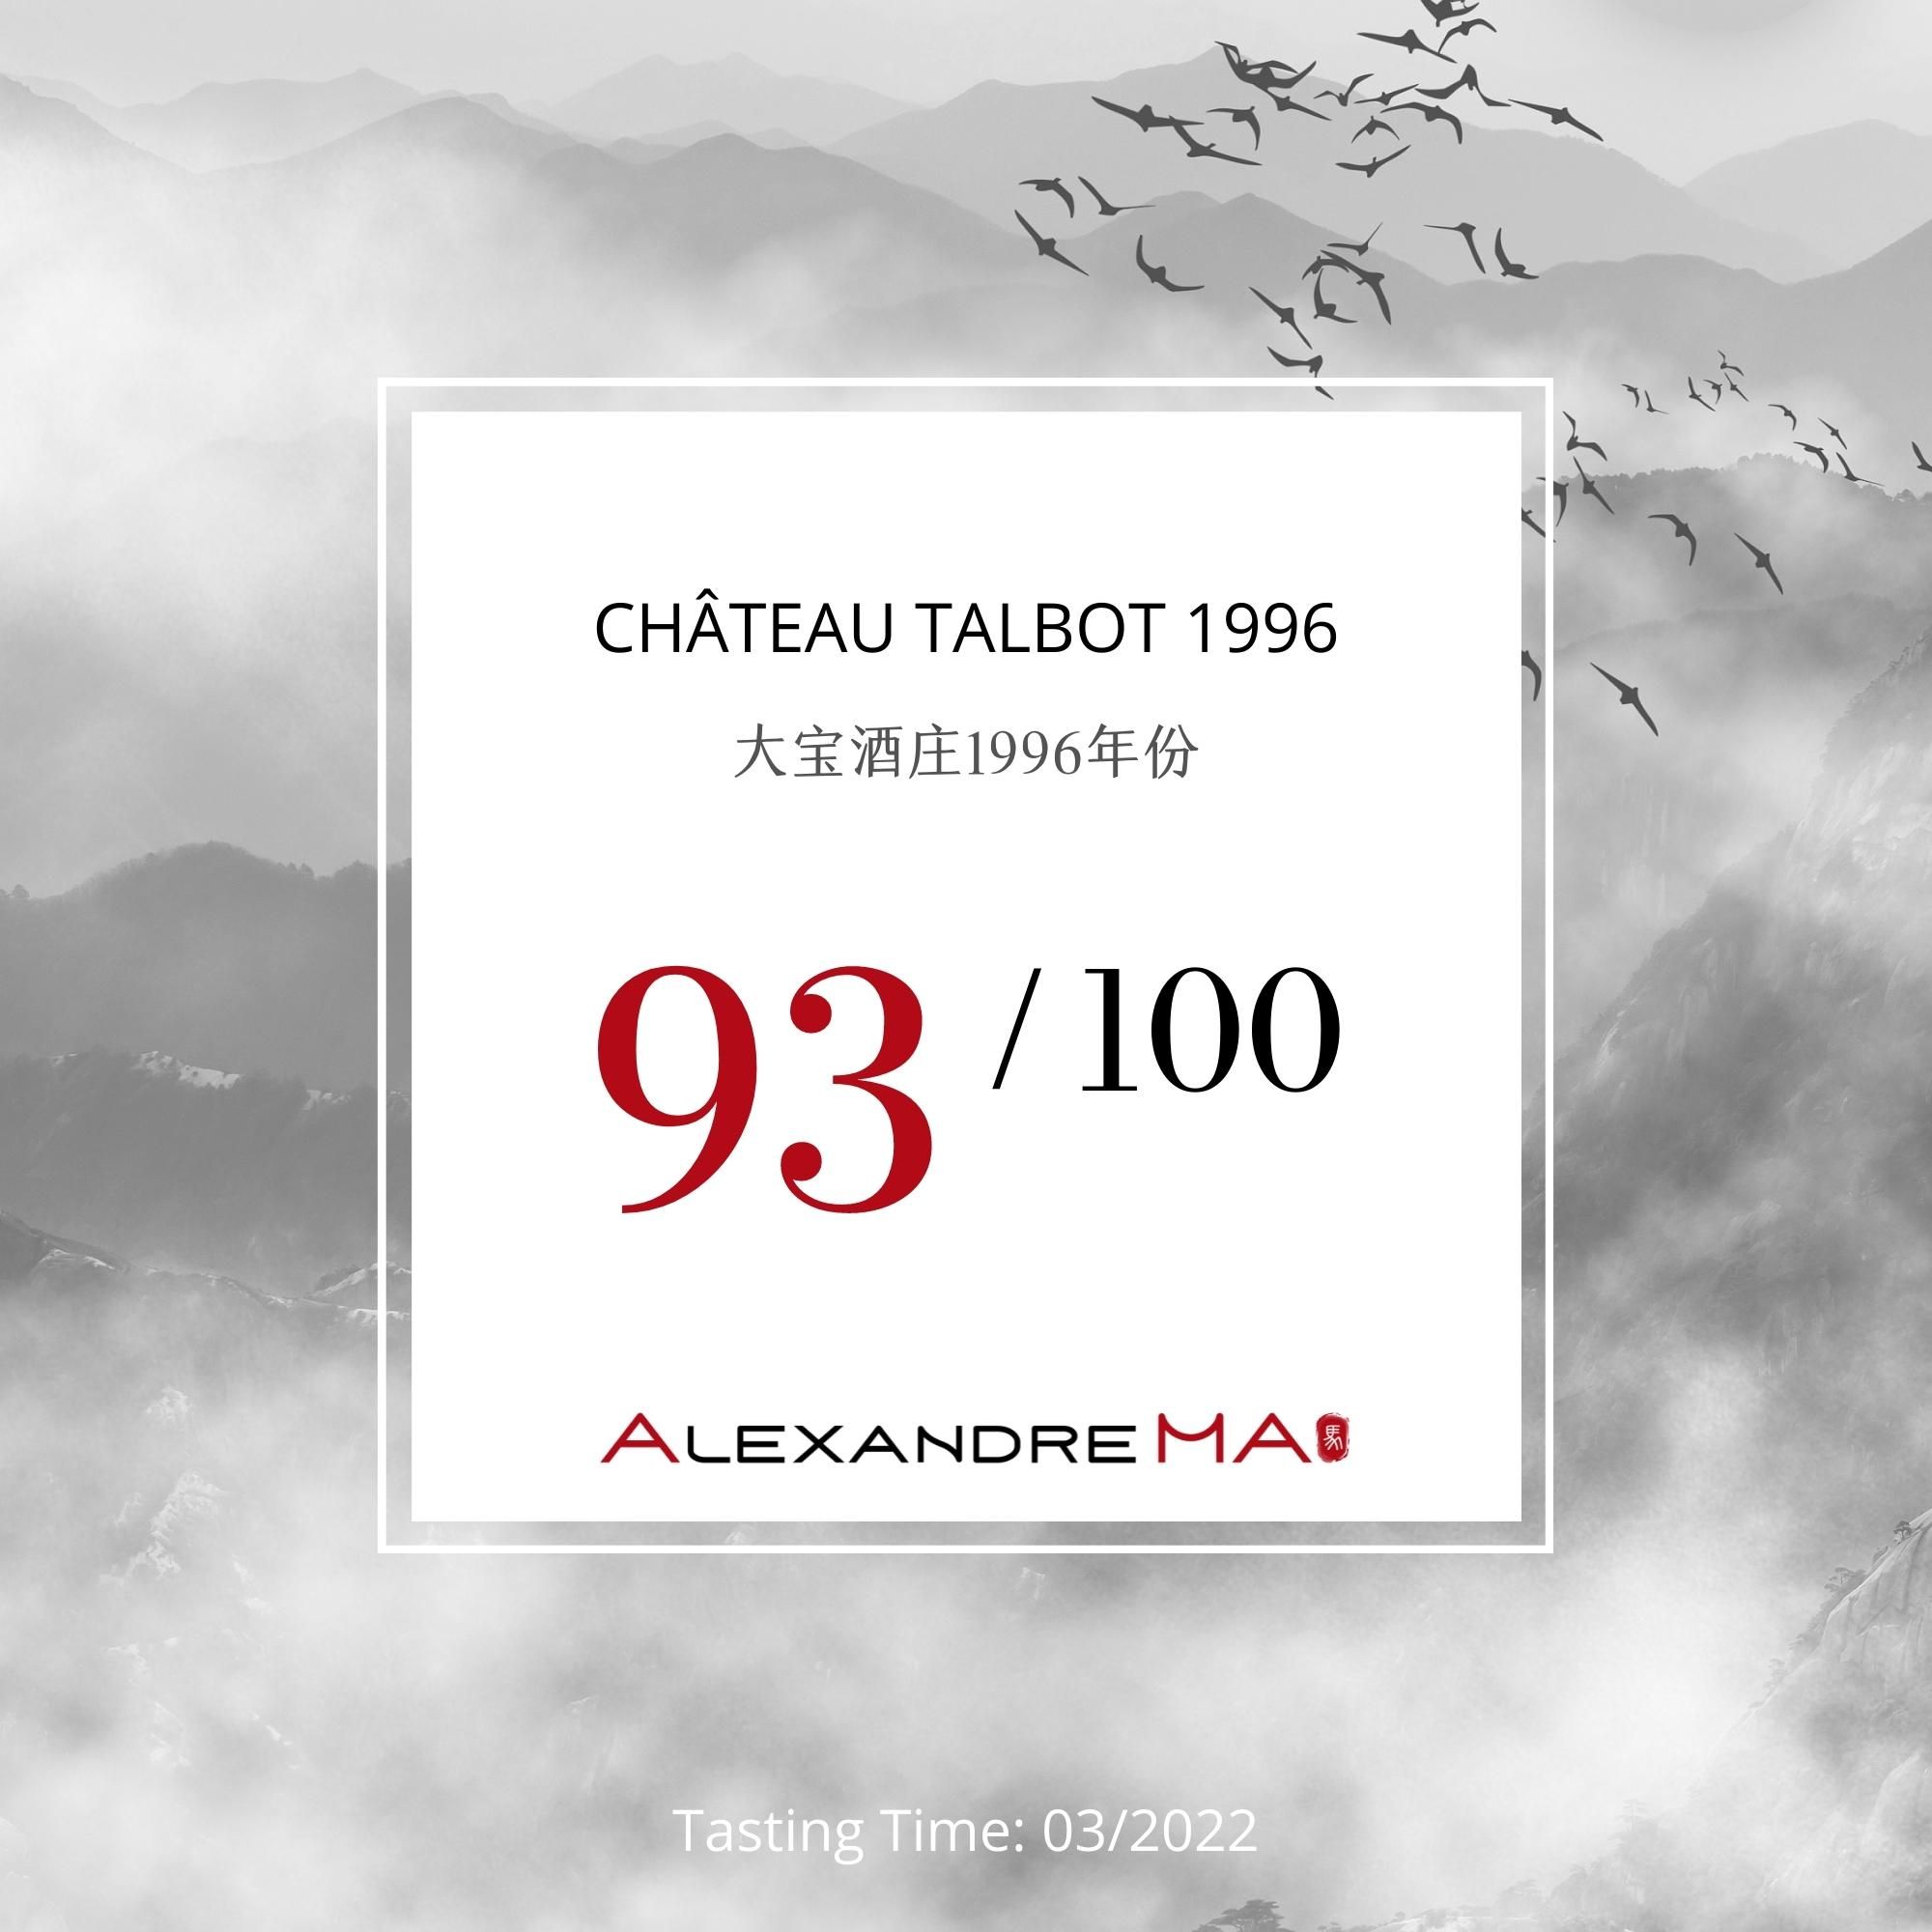 Château Talbot 1996 - Alexandre MA